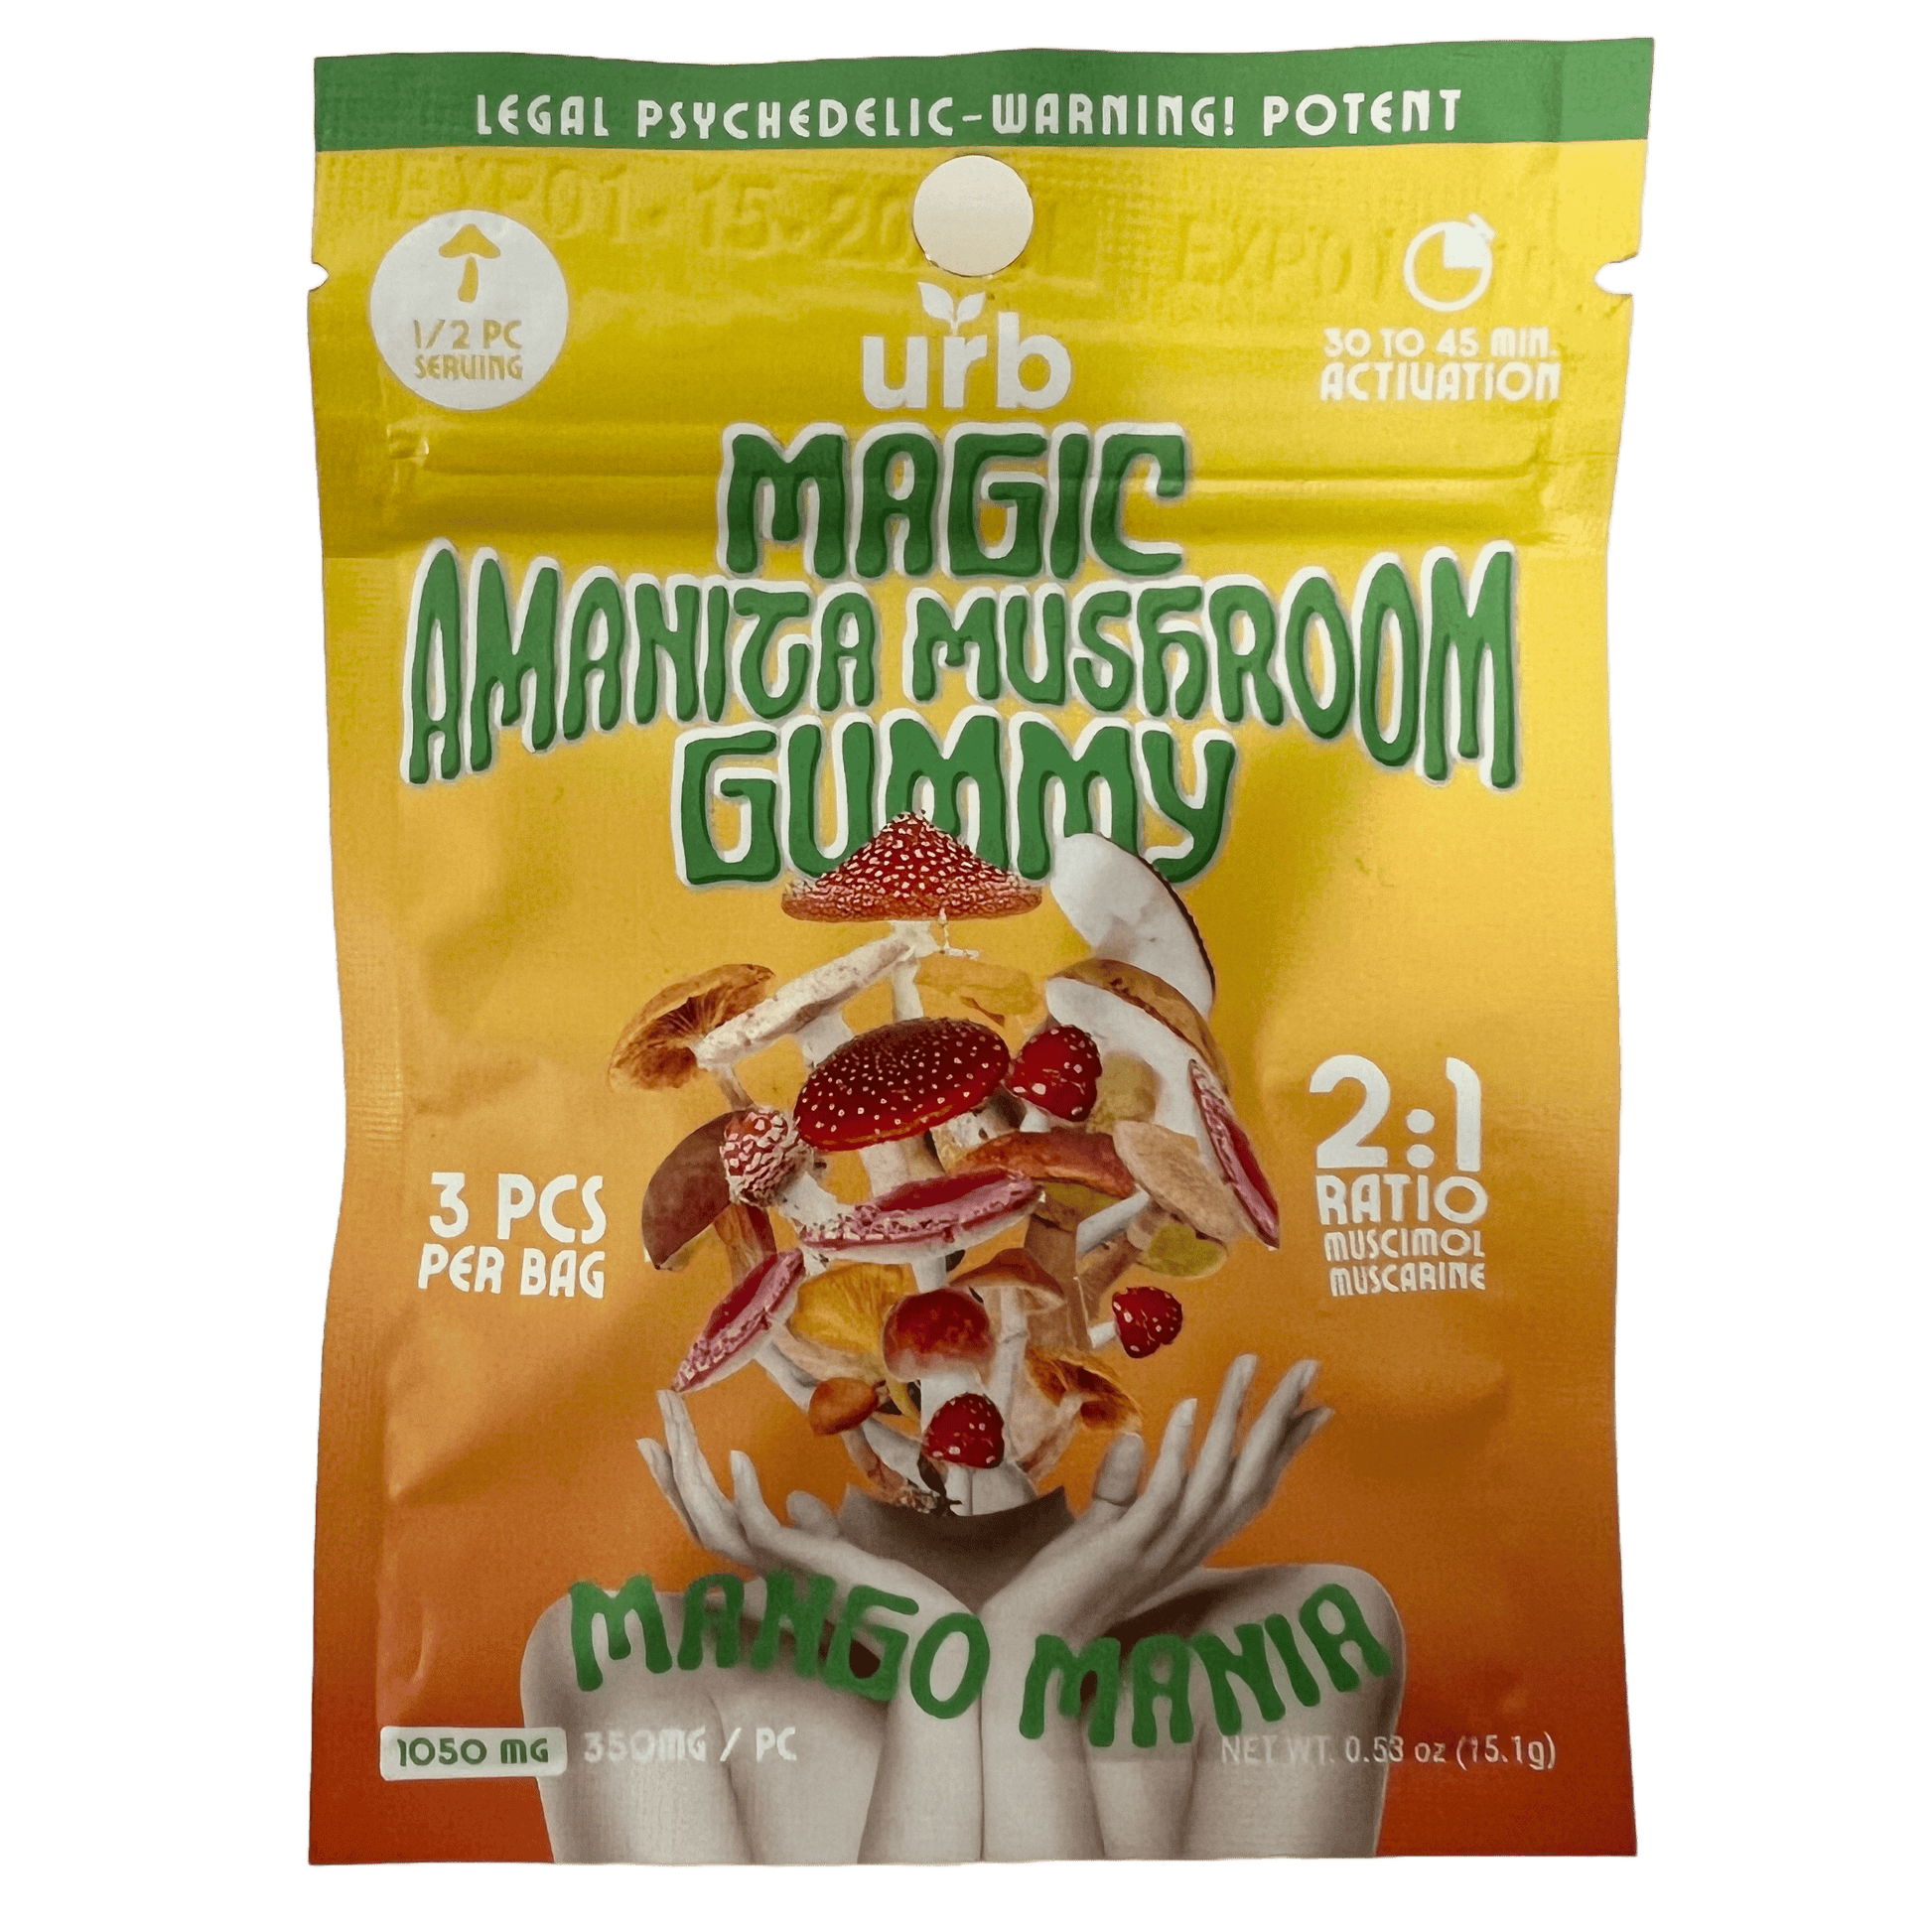 Urb Magic Amanita Mushroom Gummies